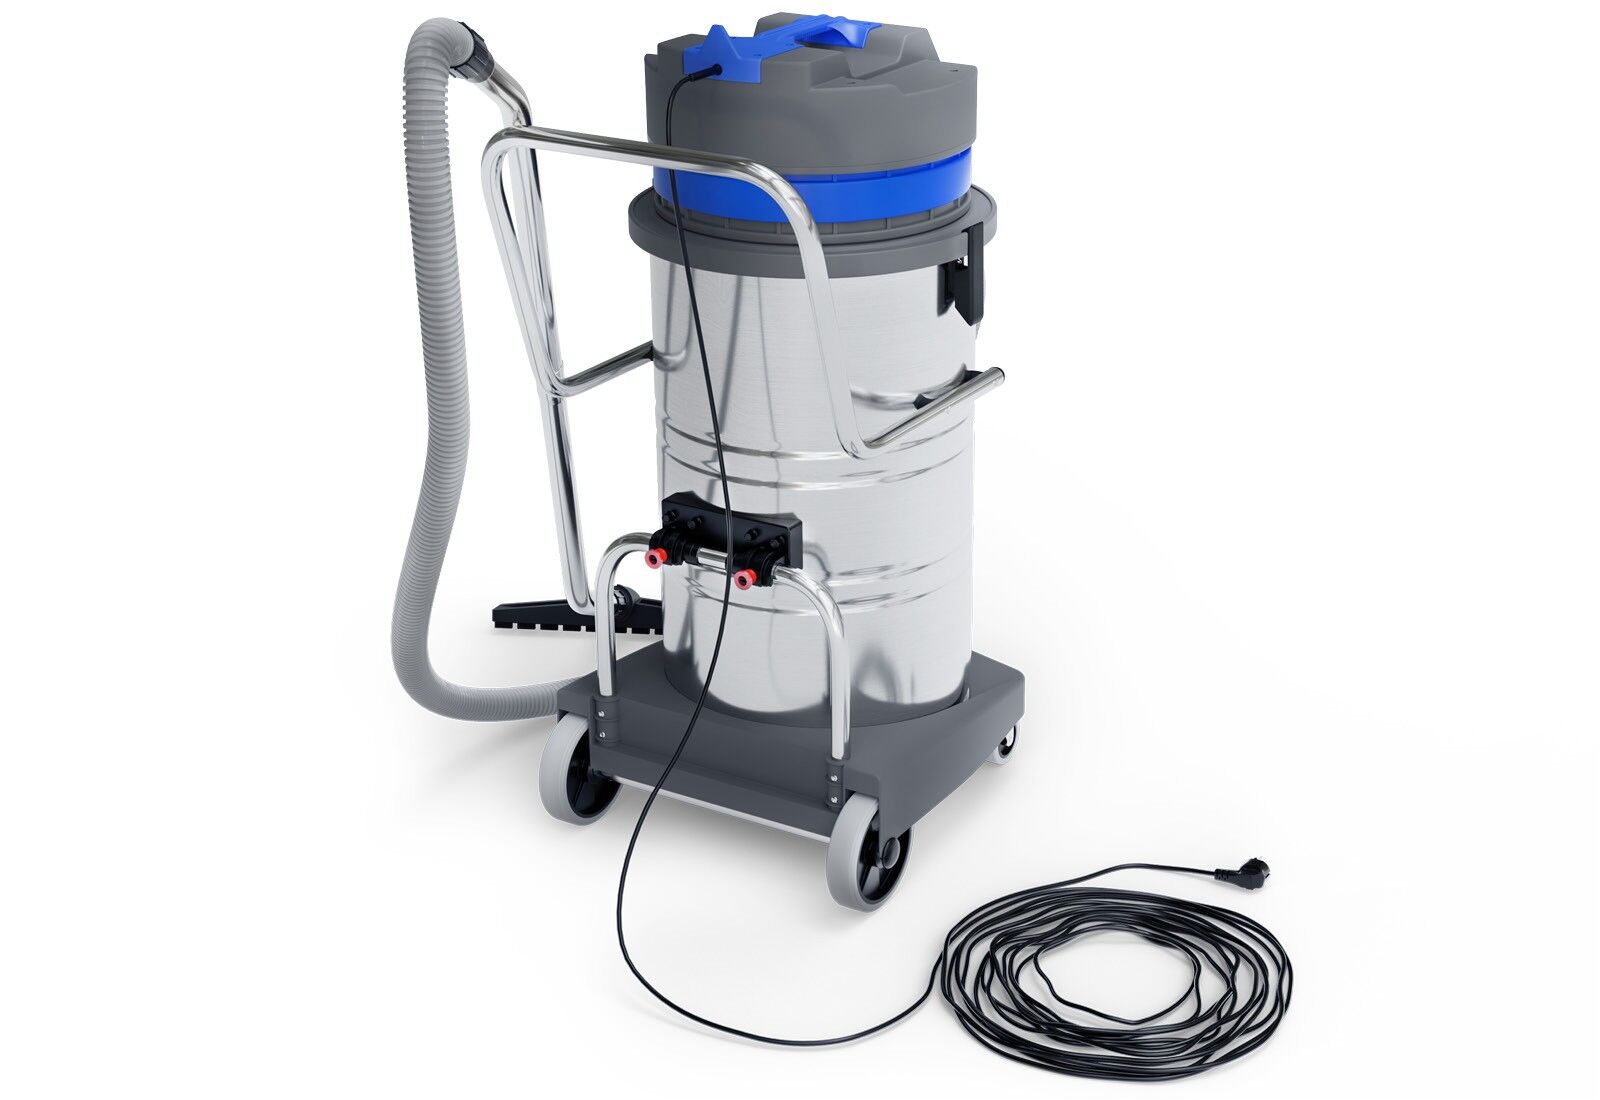 First-class dust mite vacuum cleaner: Water vacuum cleaner